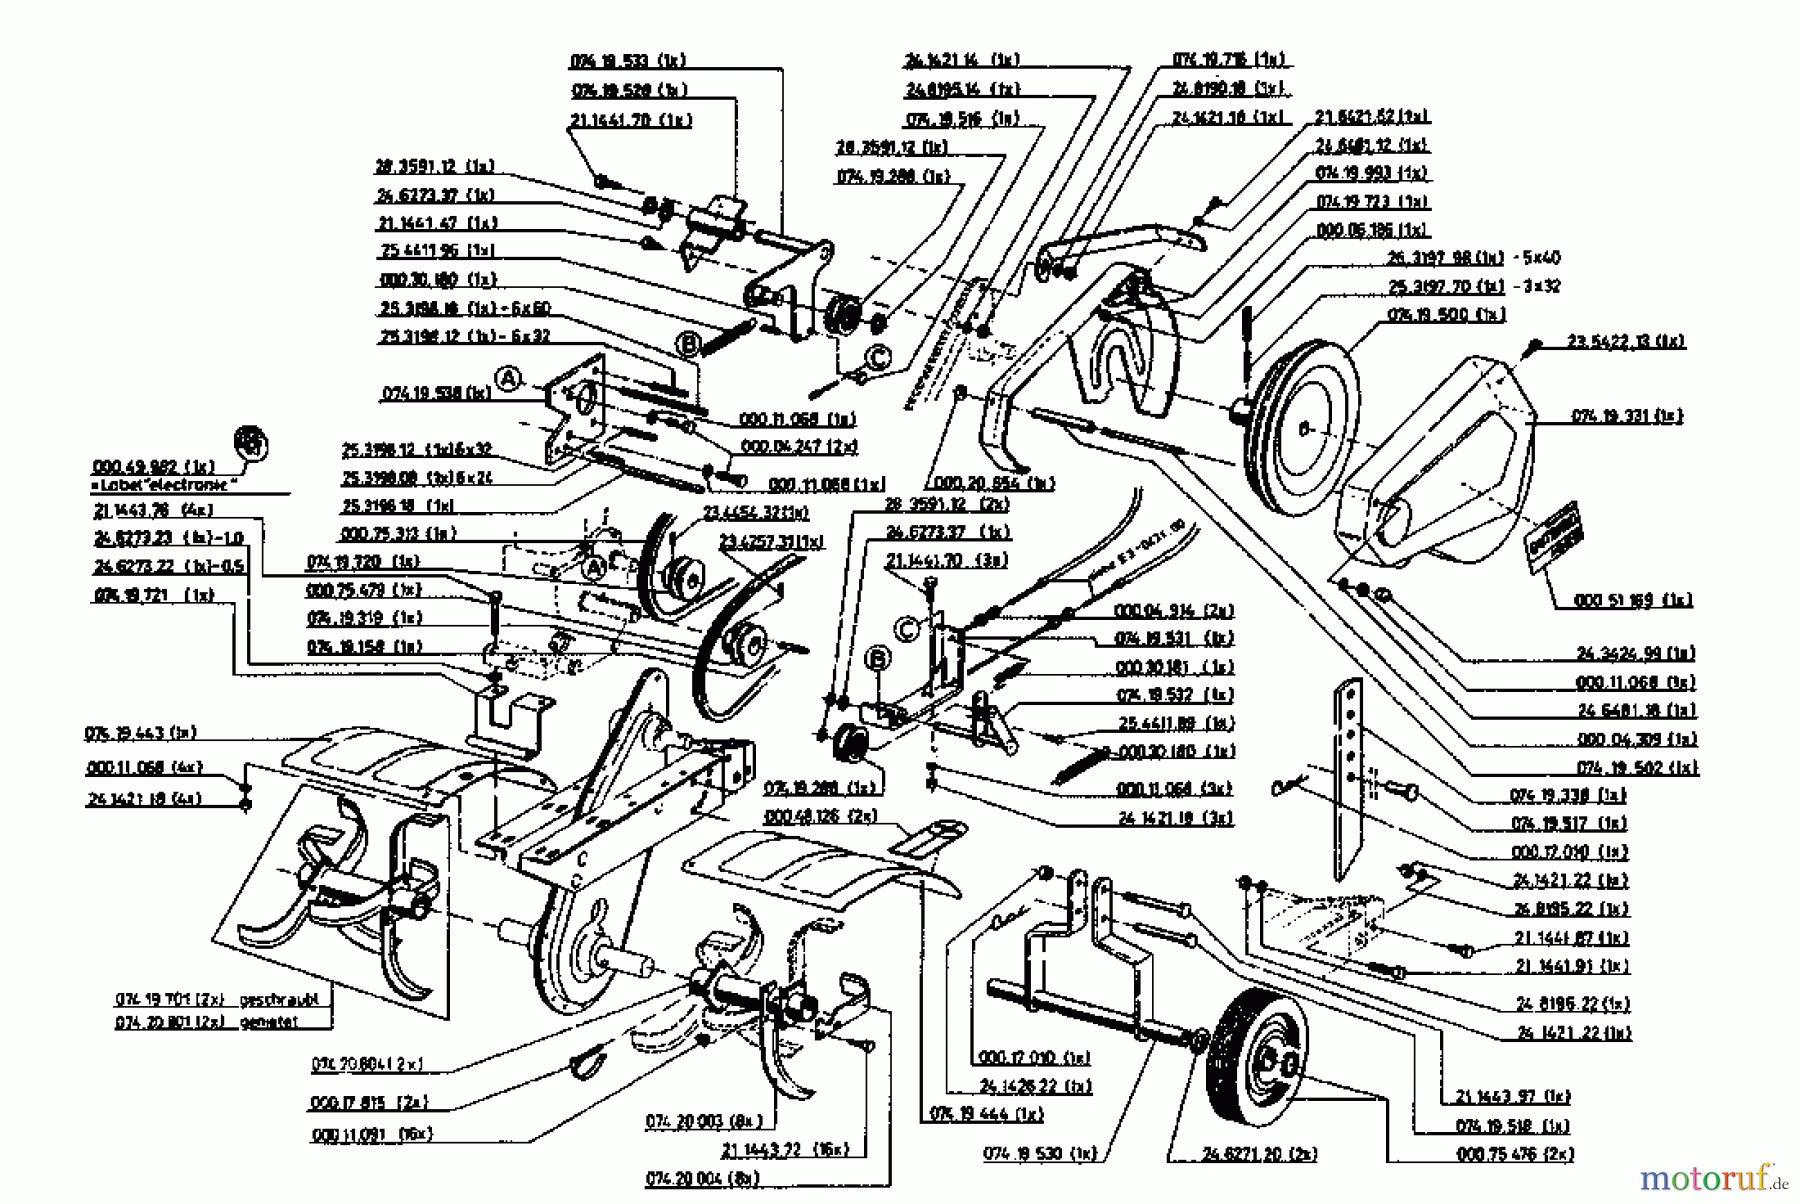  Gutbrod Motorhacken MB 62-52 07518.02  (1995) Grundgerät